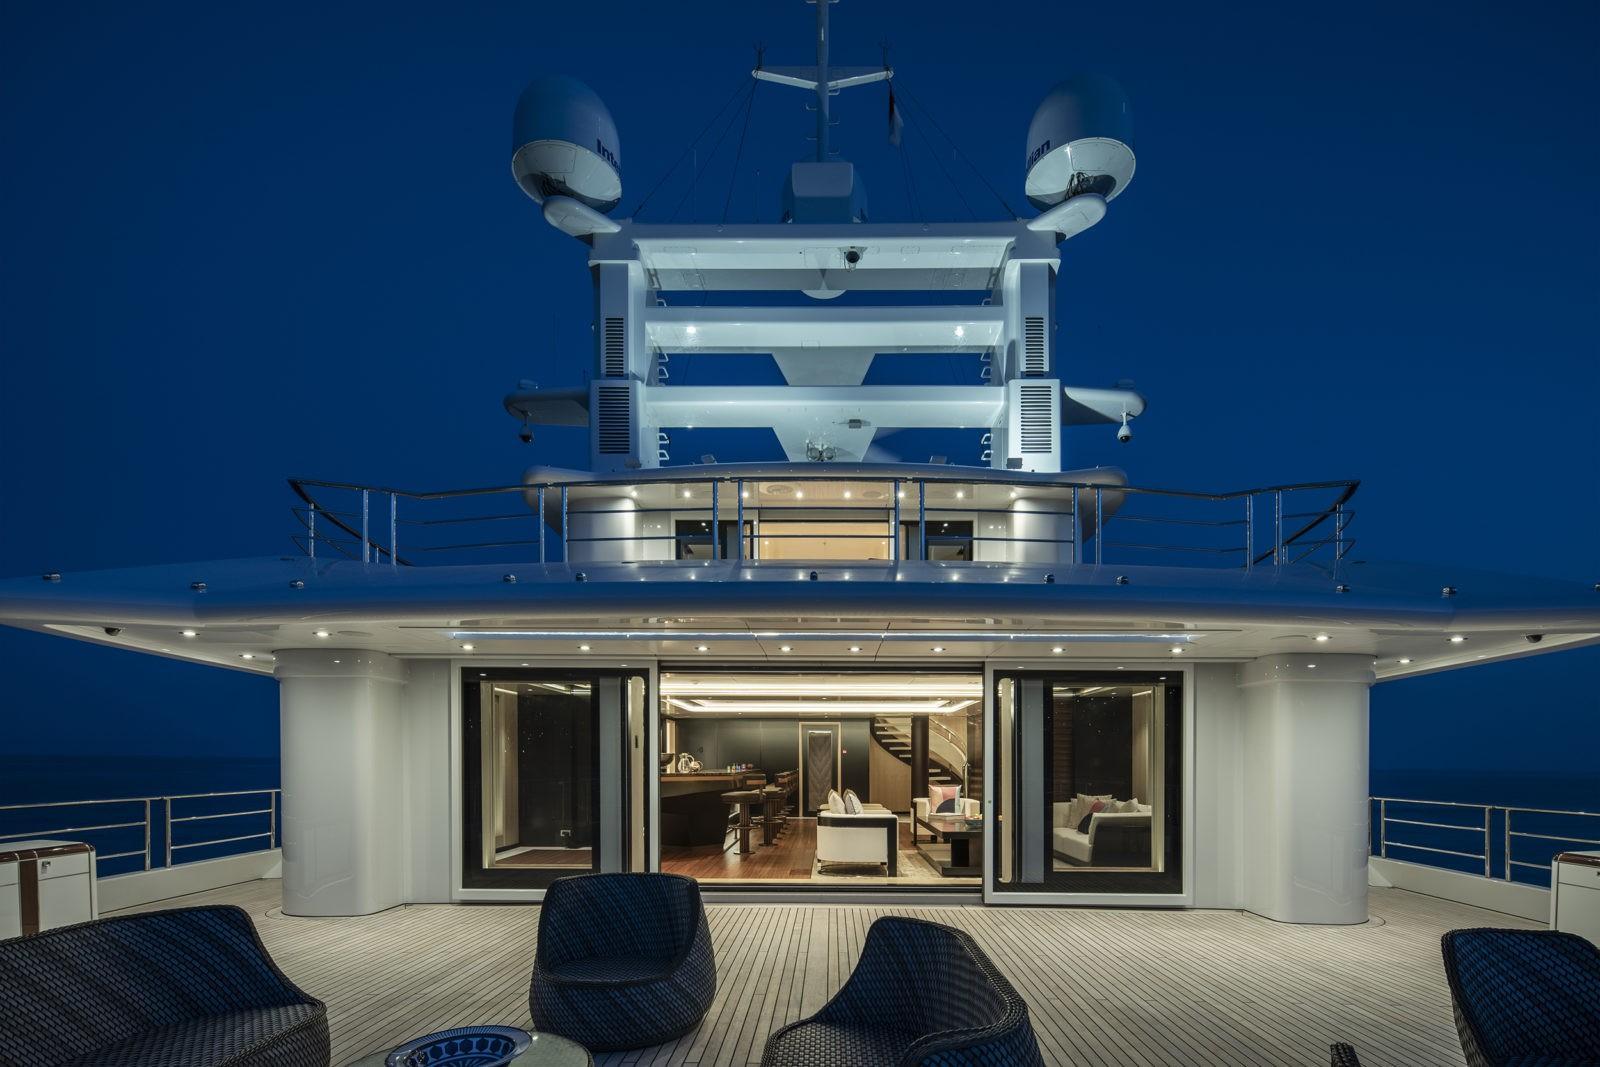 tim saunders yacht design